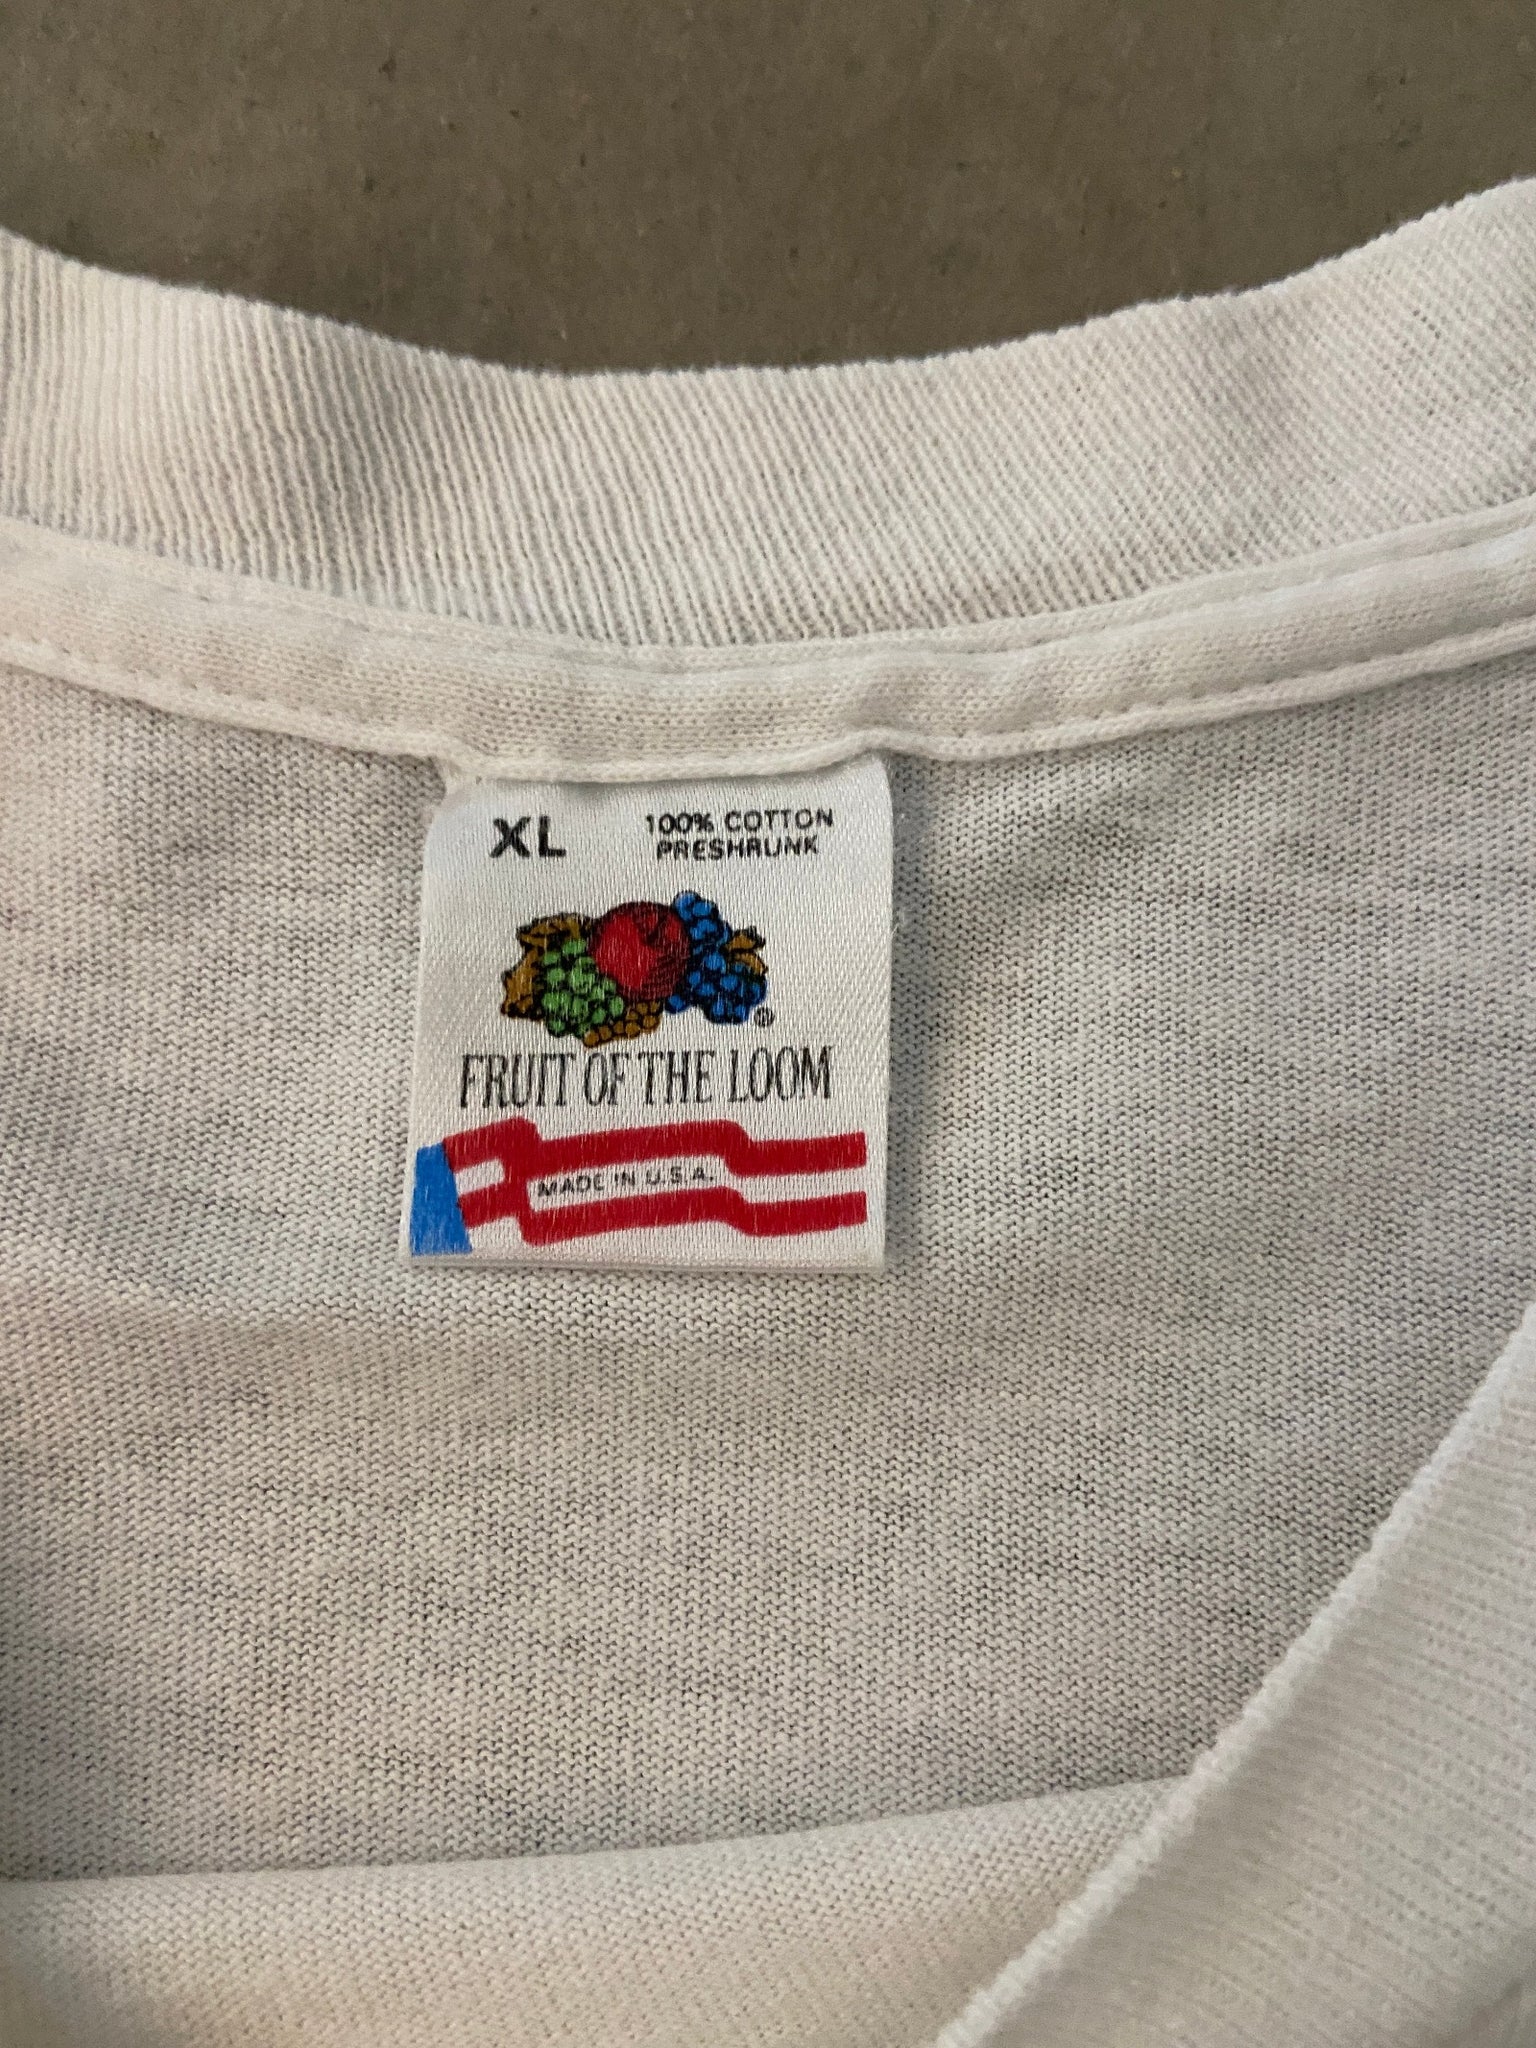 1992 America’s Cup Mount Gay T-shirt - XL